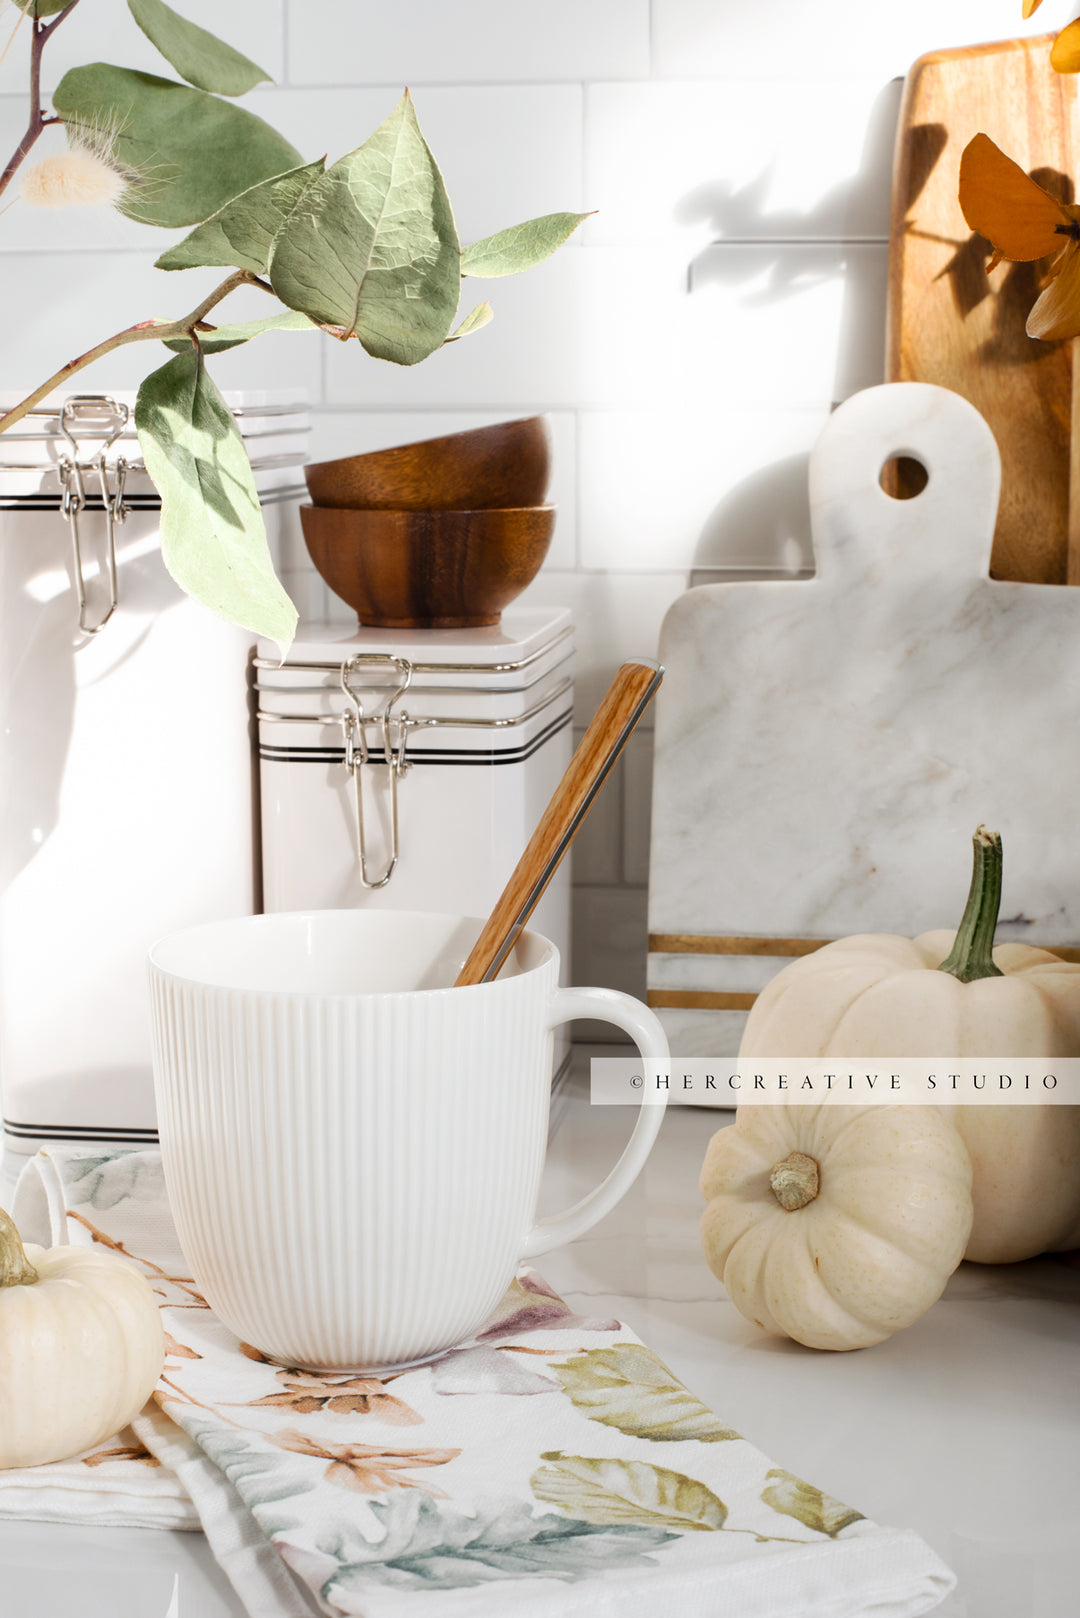 Tea & Fall Pumpkins in Kitchen 2. Digital Stock Image.